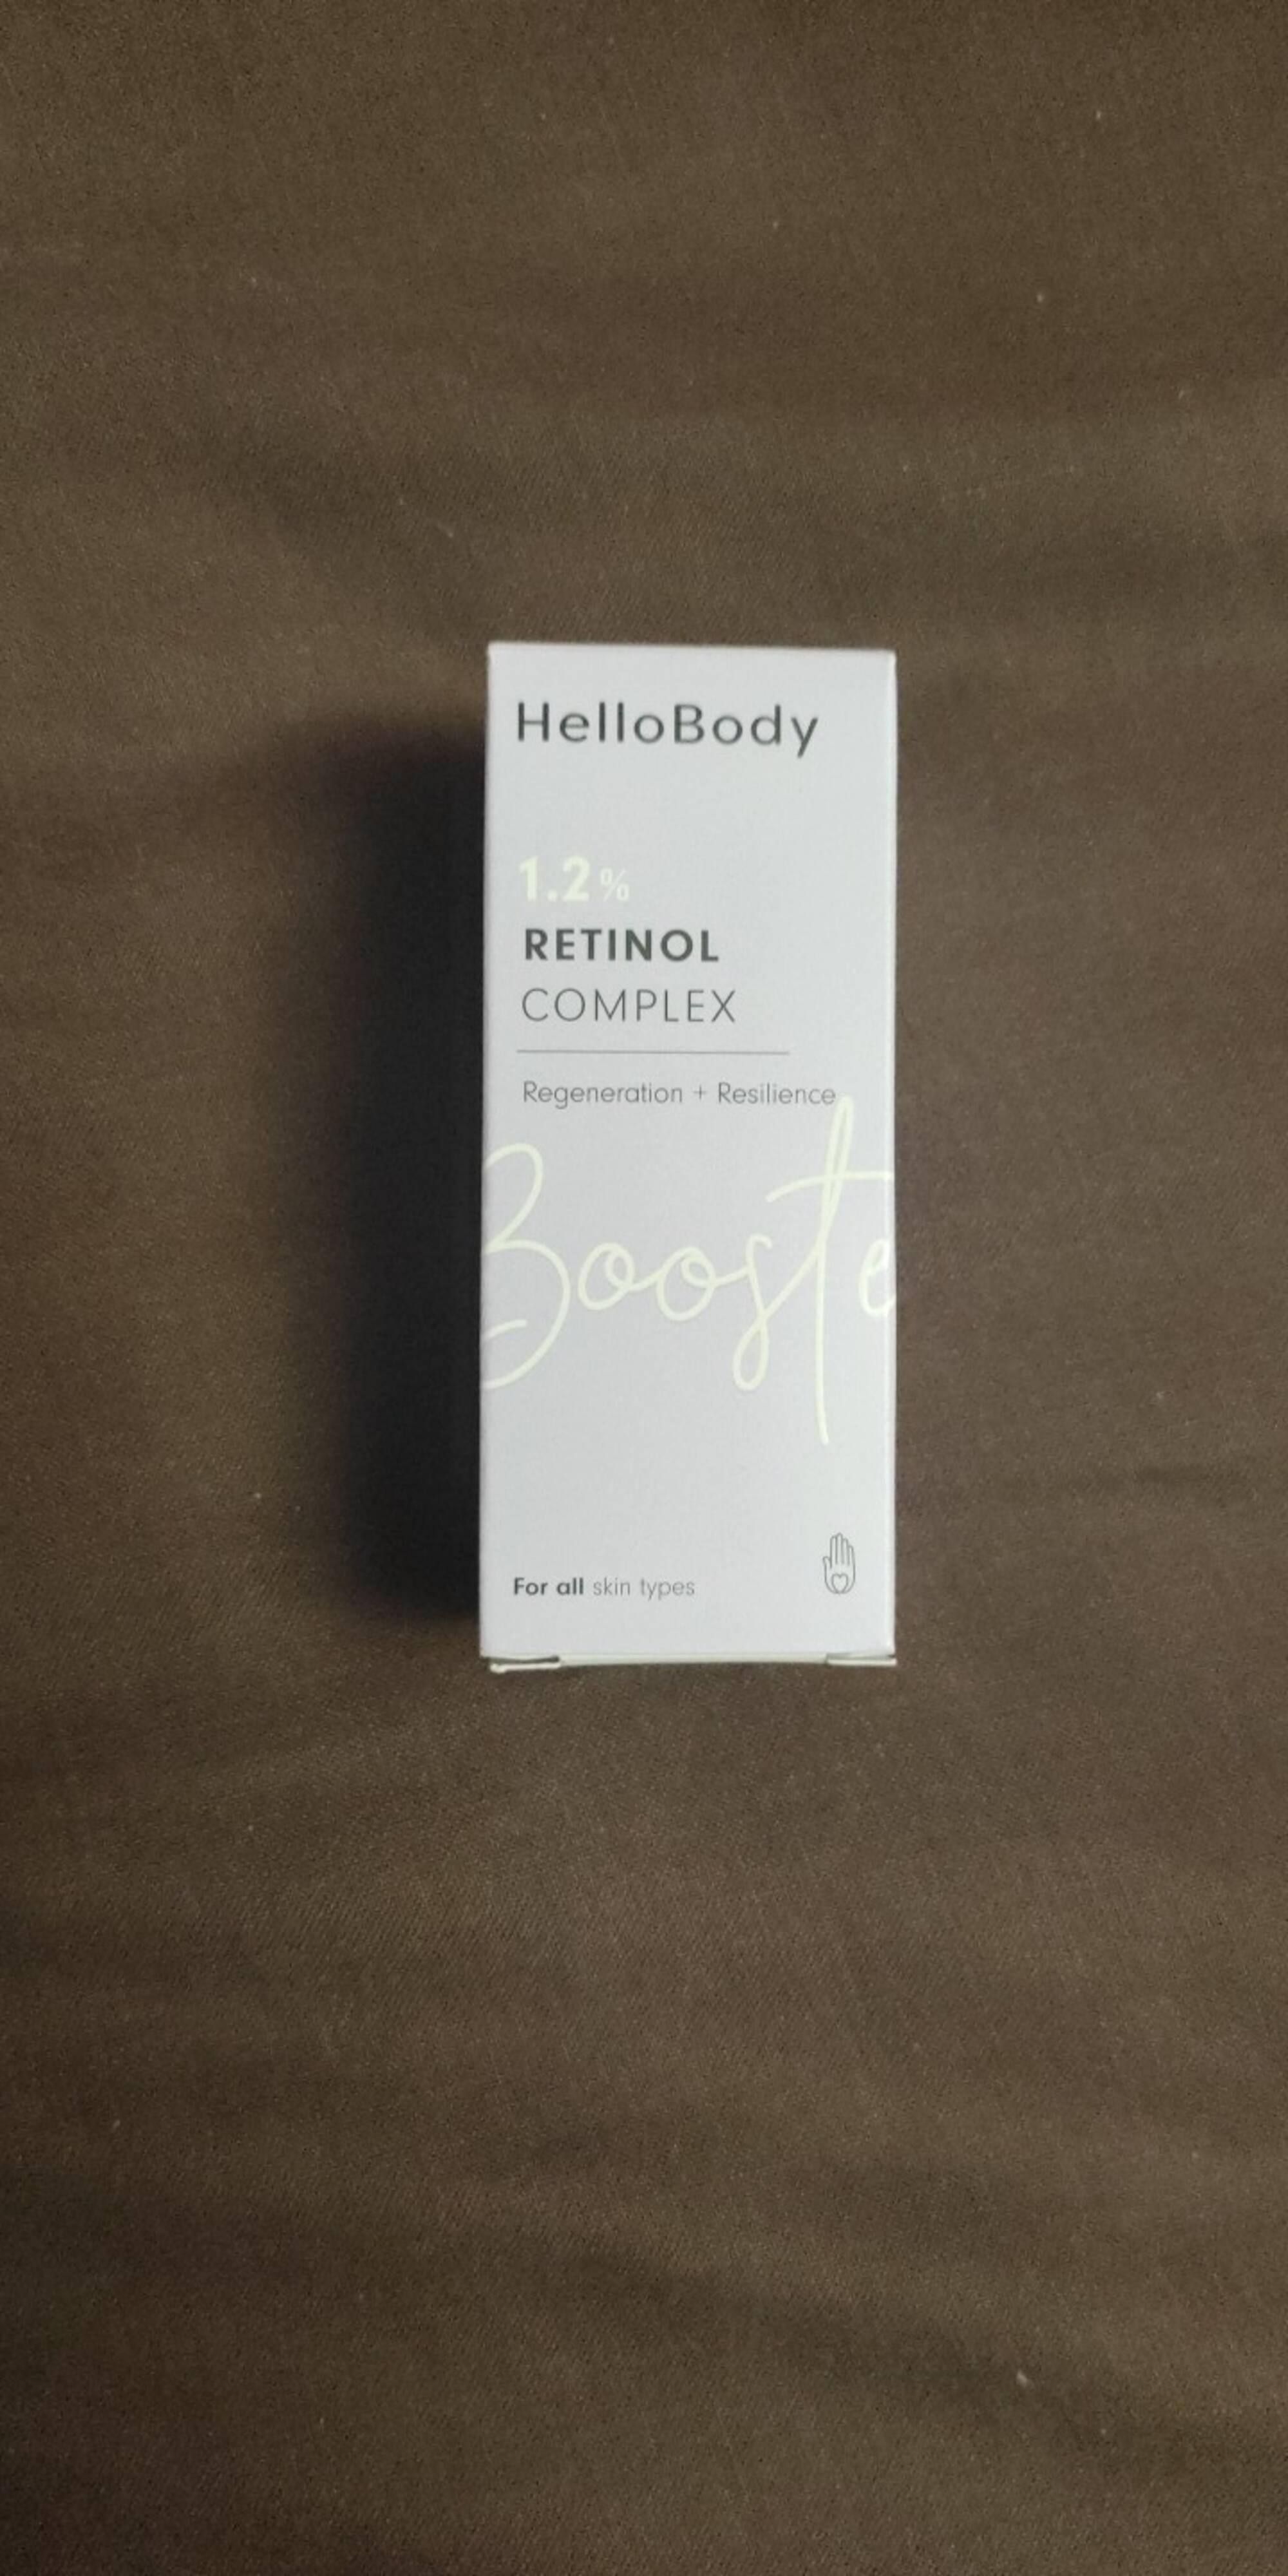 HELLOBODY - 1.2% Retinol complex - Booster regeneration + resilience